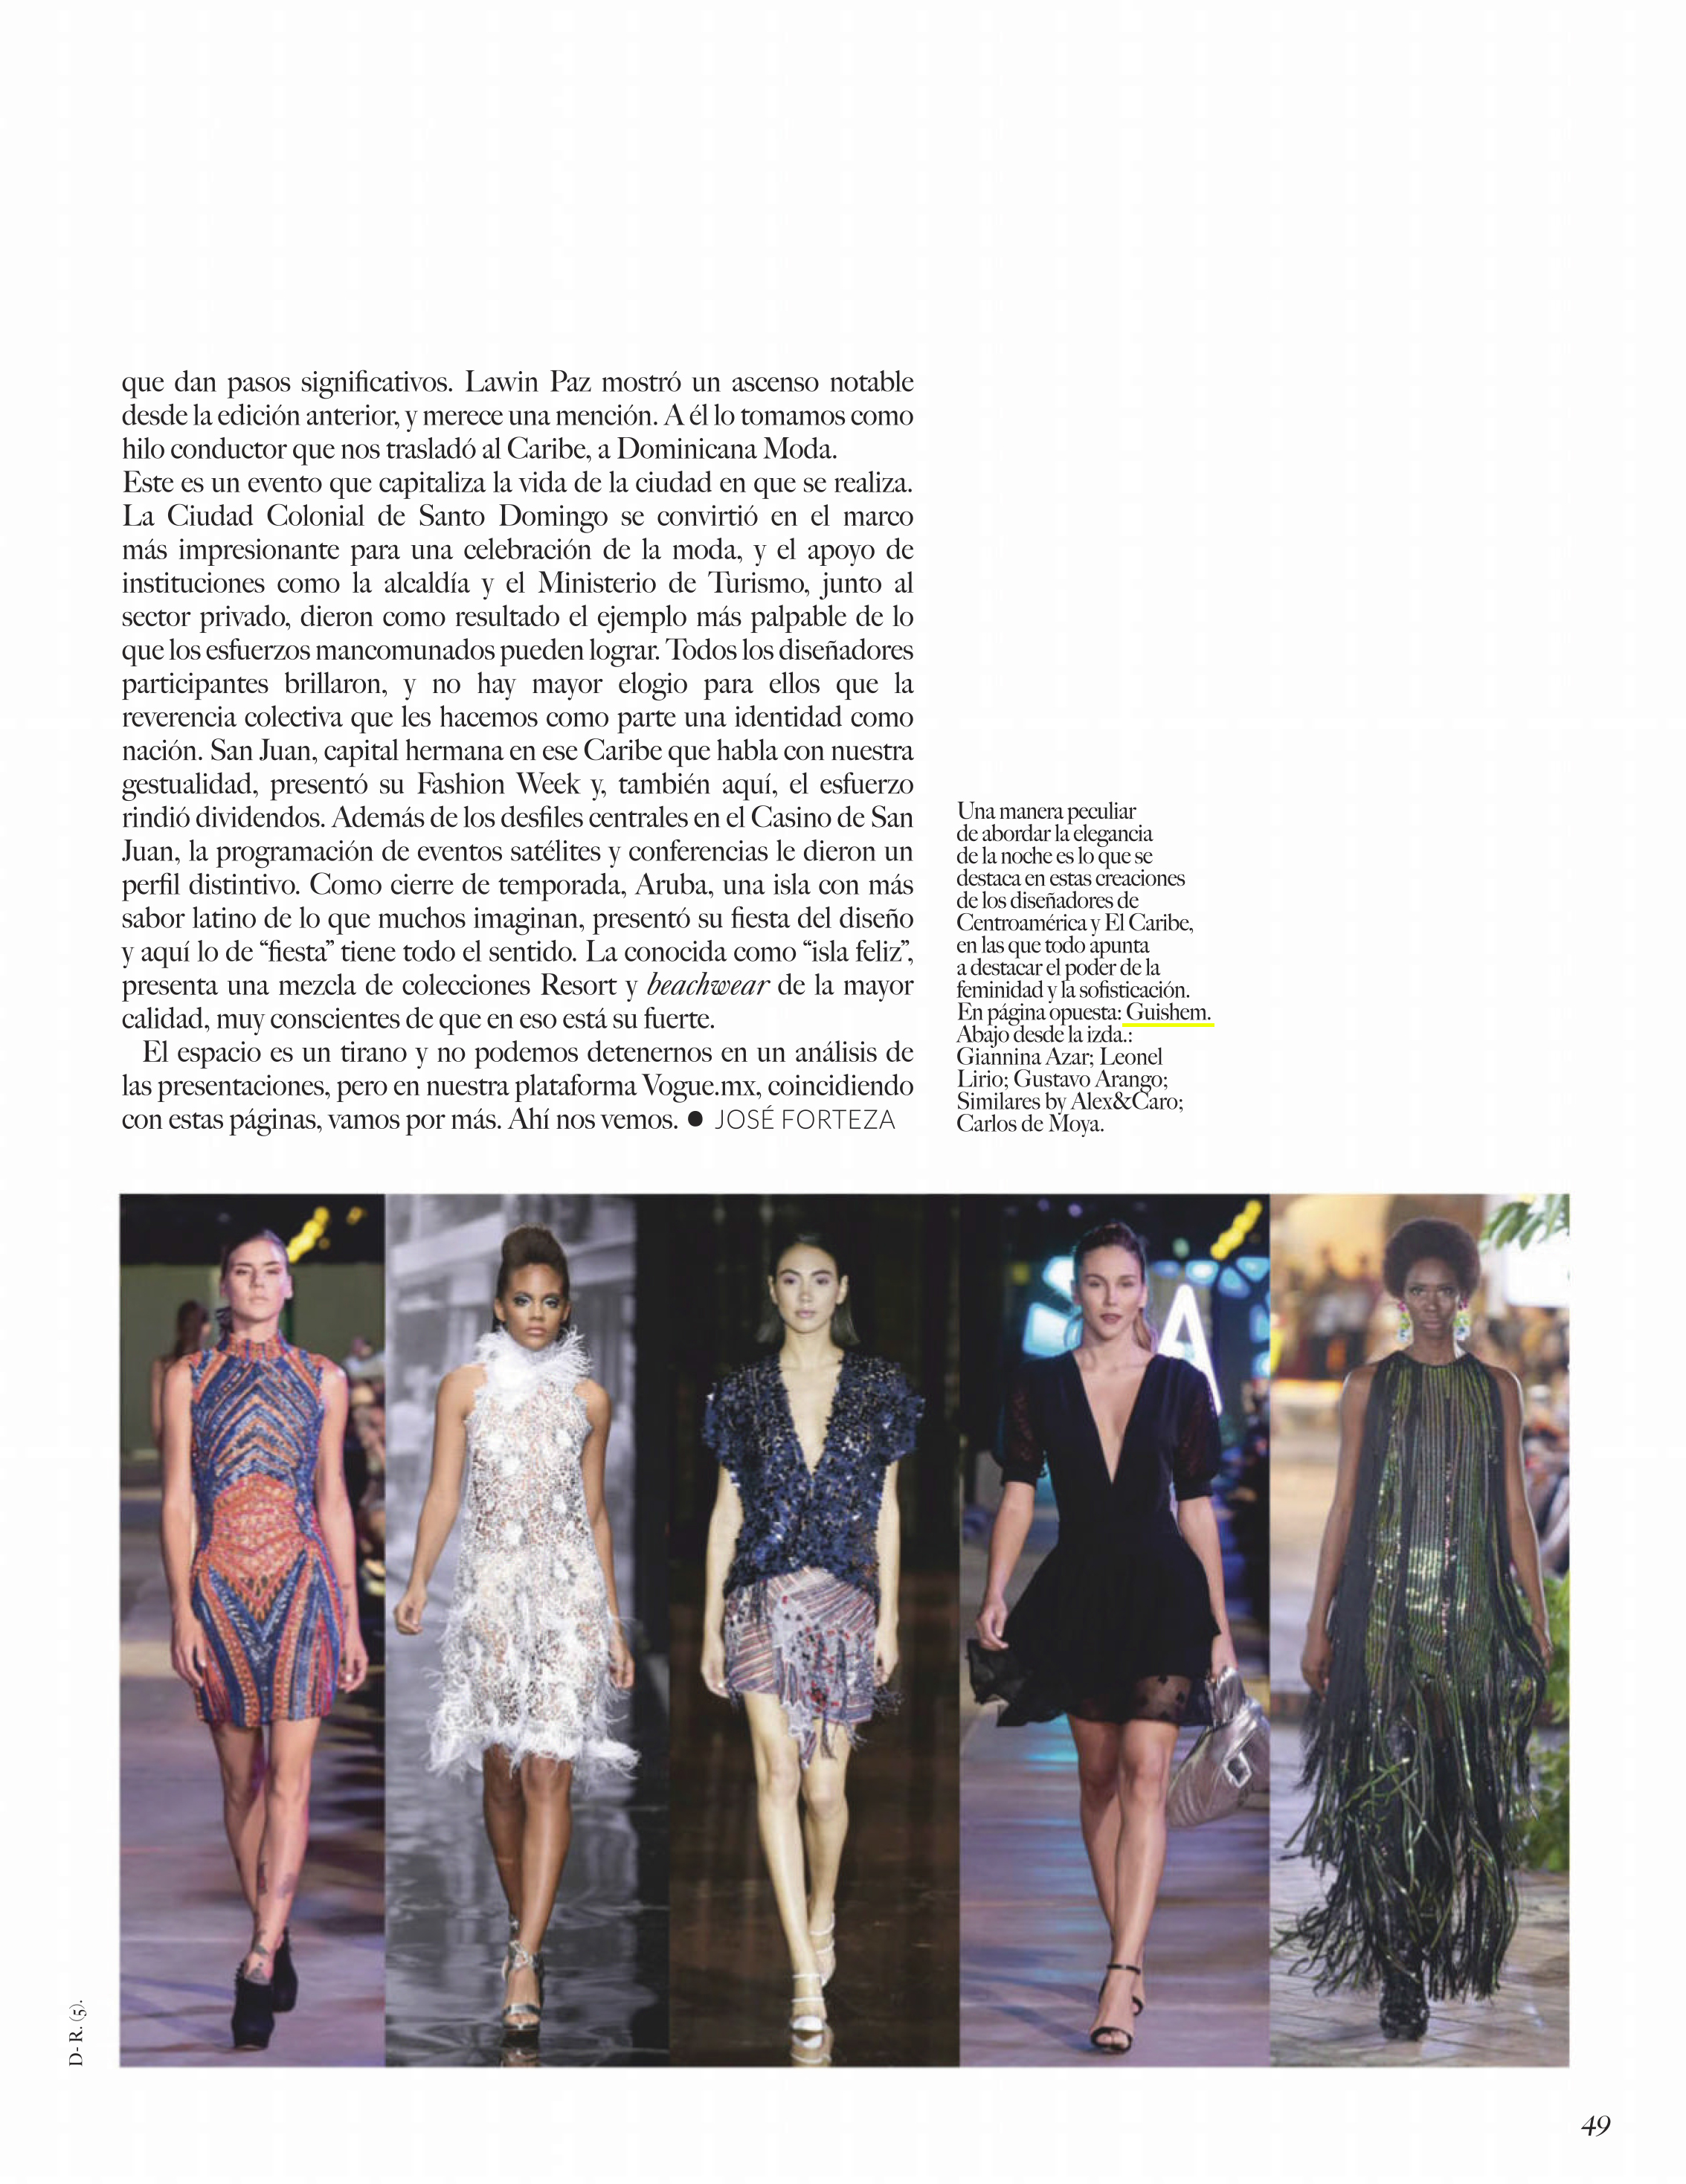 GUiSHEM inside spread of Vogue Latinoamerica, March 2019